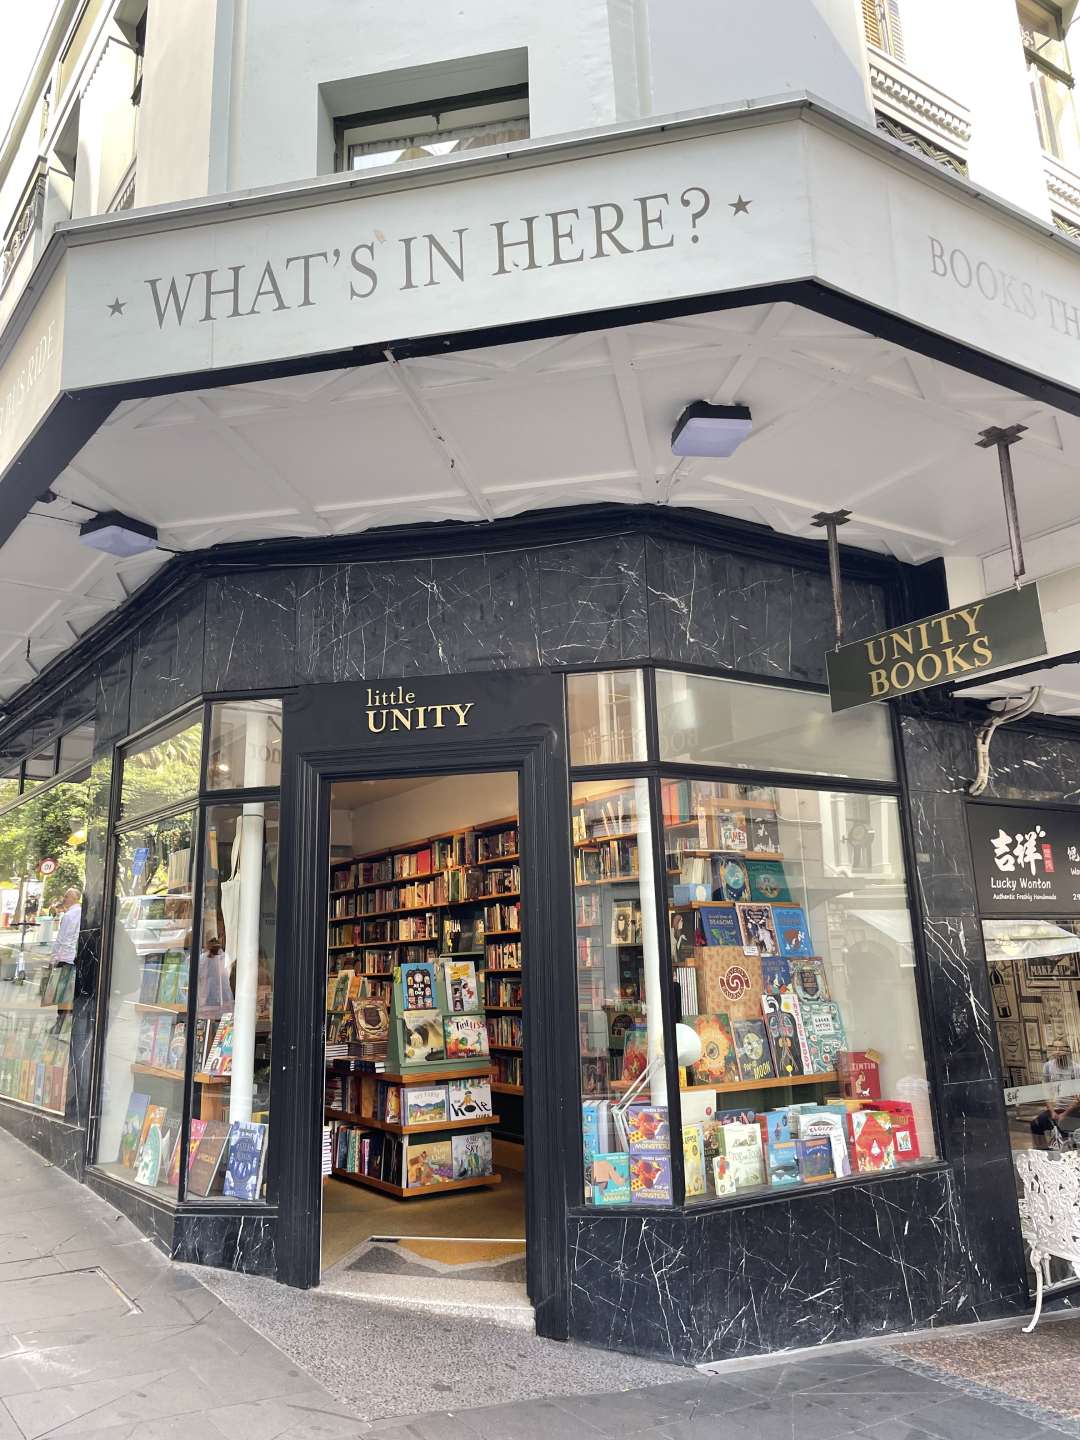 Little Unity bookstore street entrance